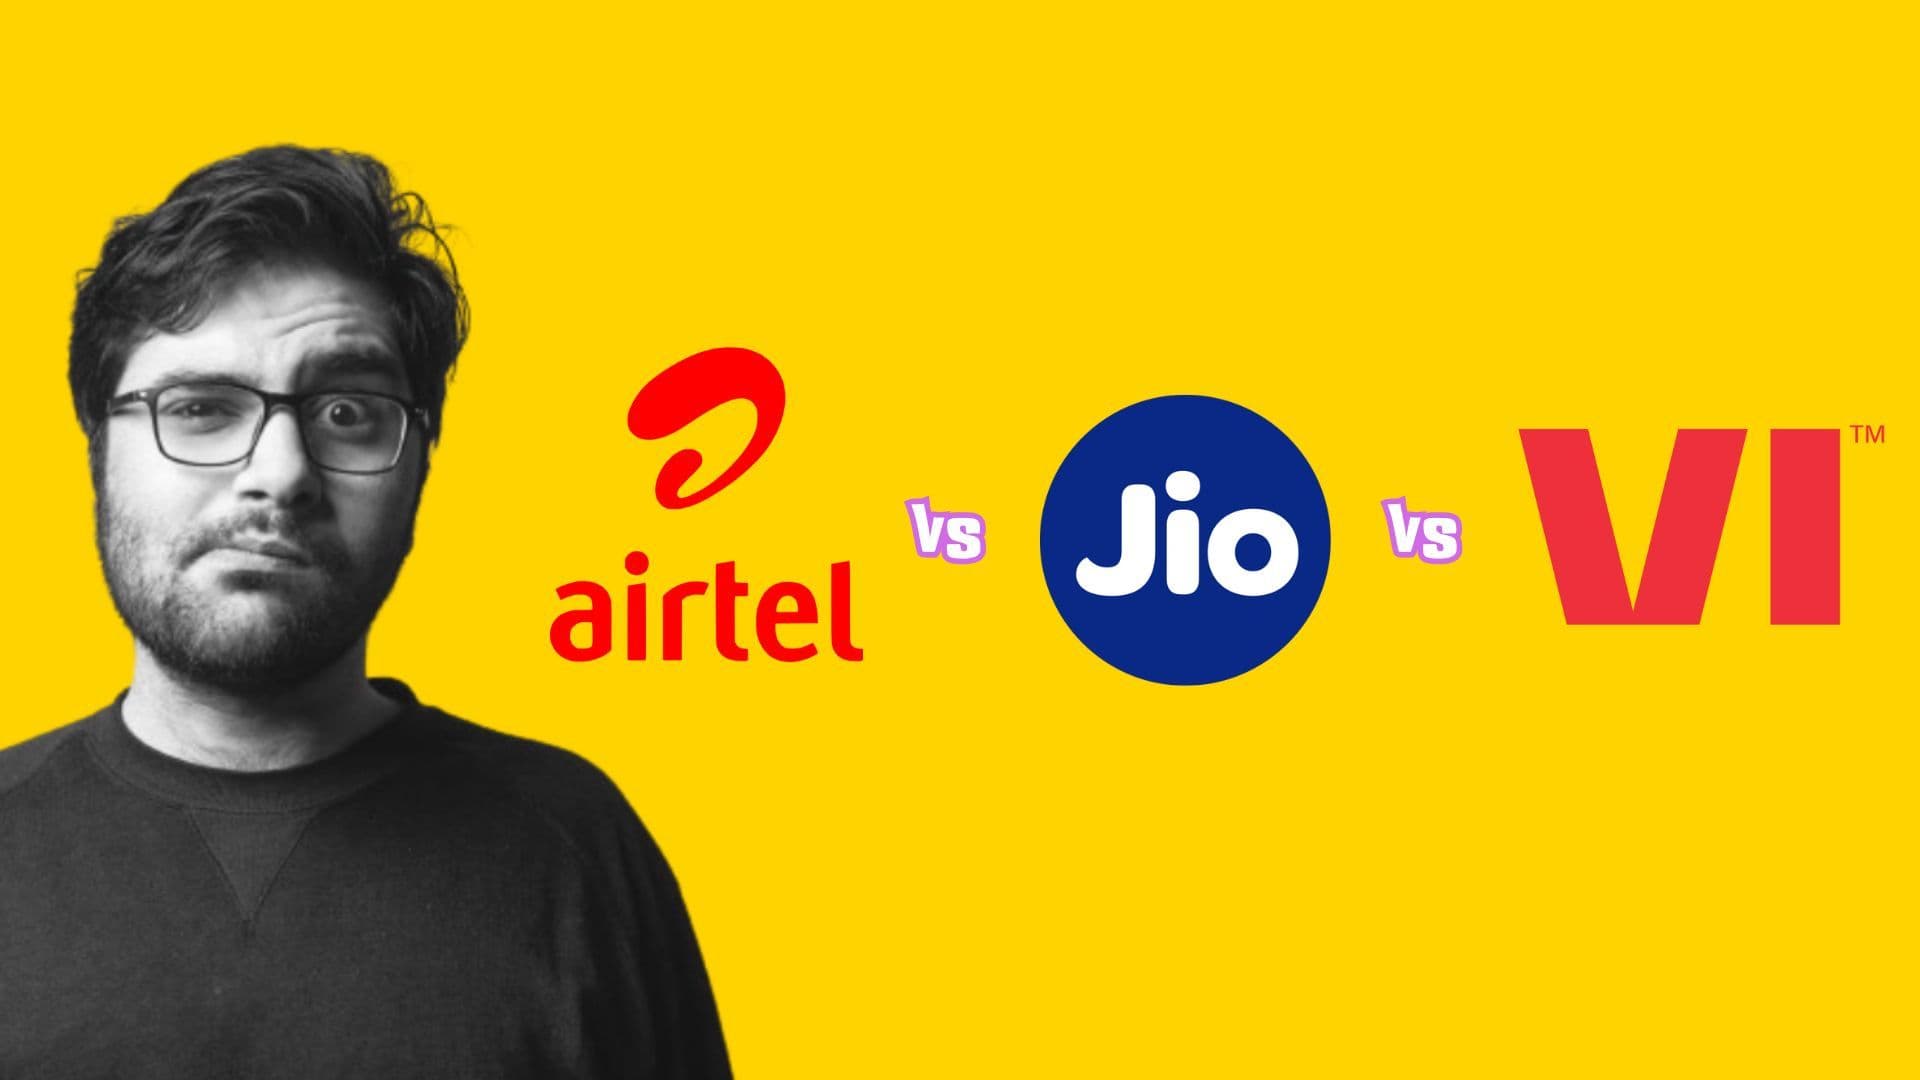 Airtel, Jio and Vodafone plan comparison